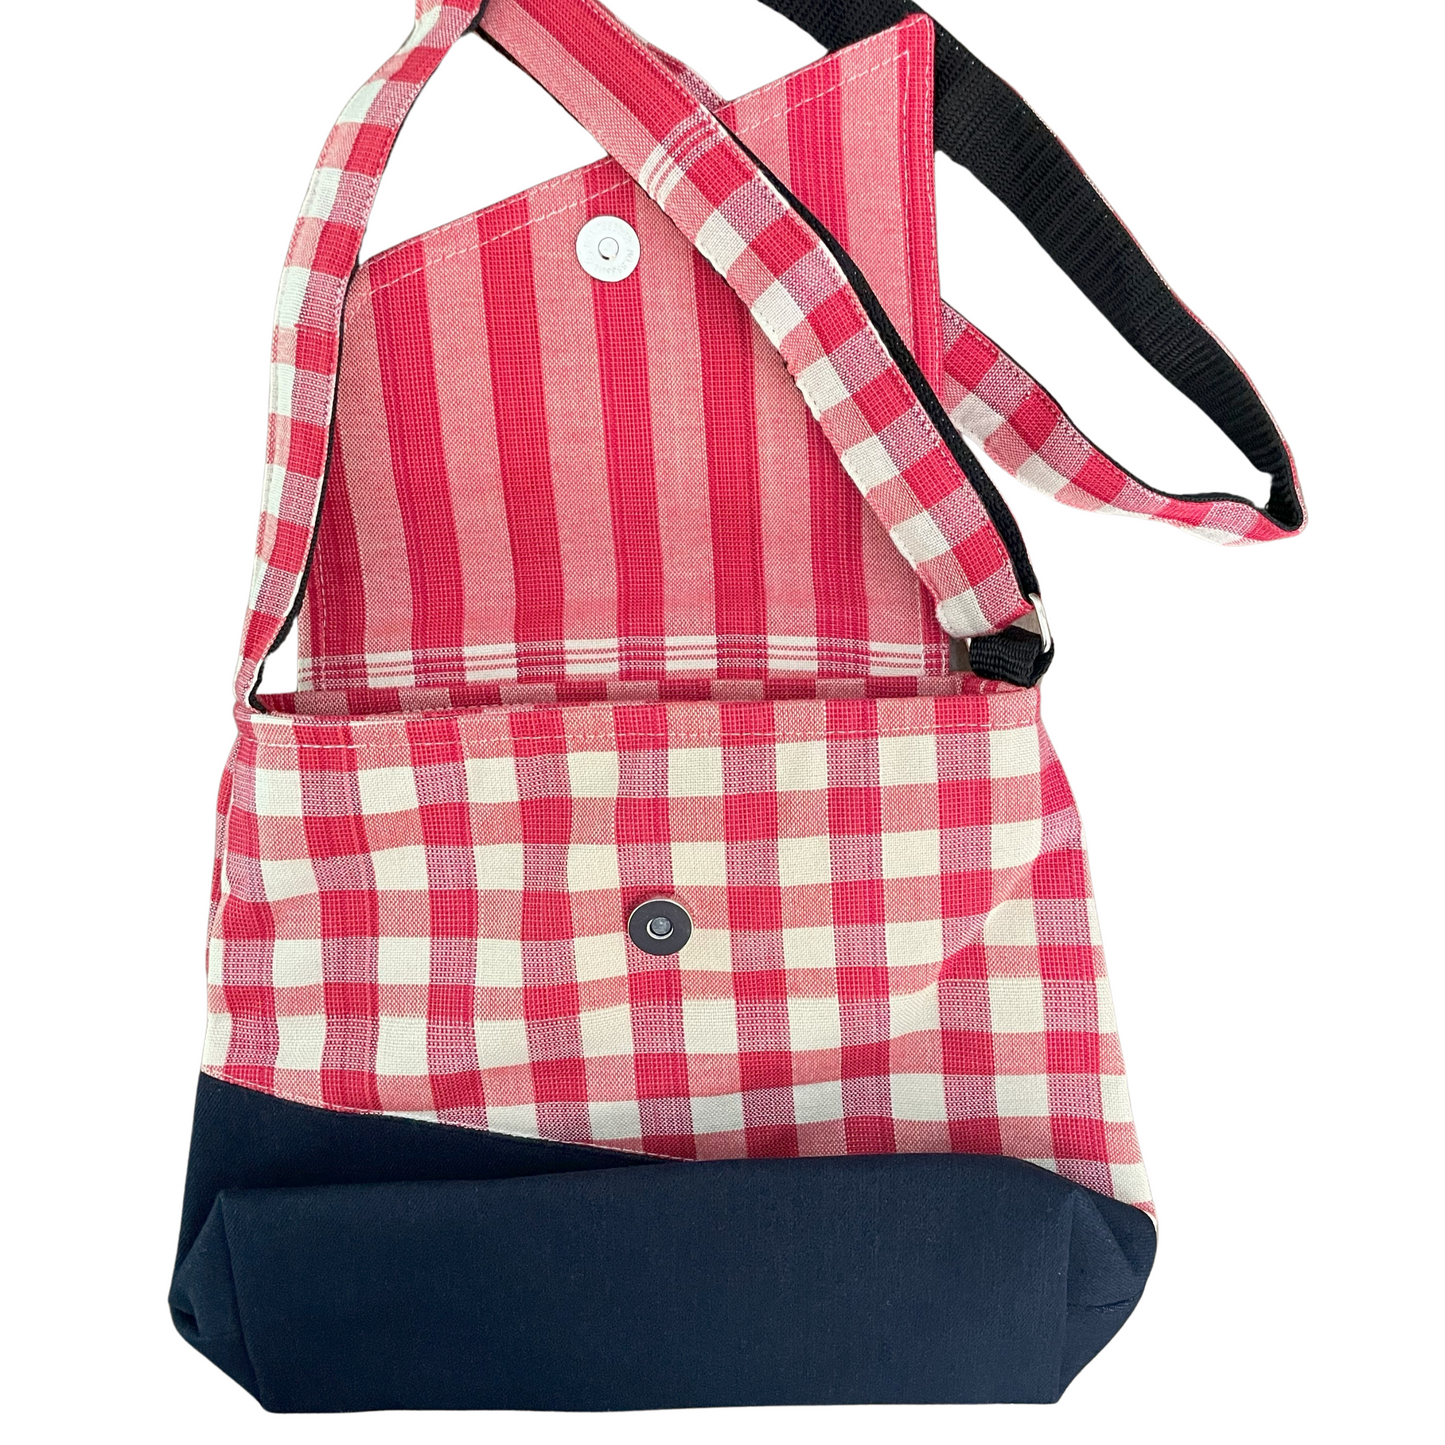 Cute Red Checks - Small Shoulder Bag